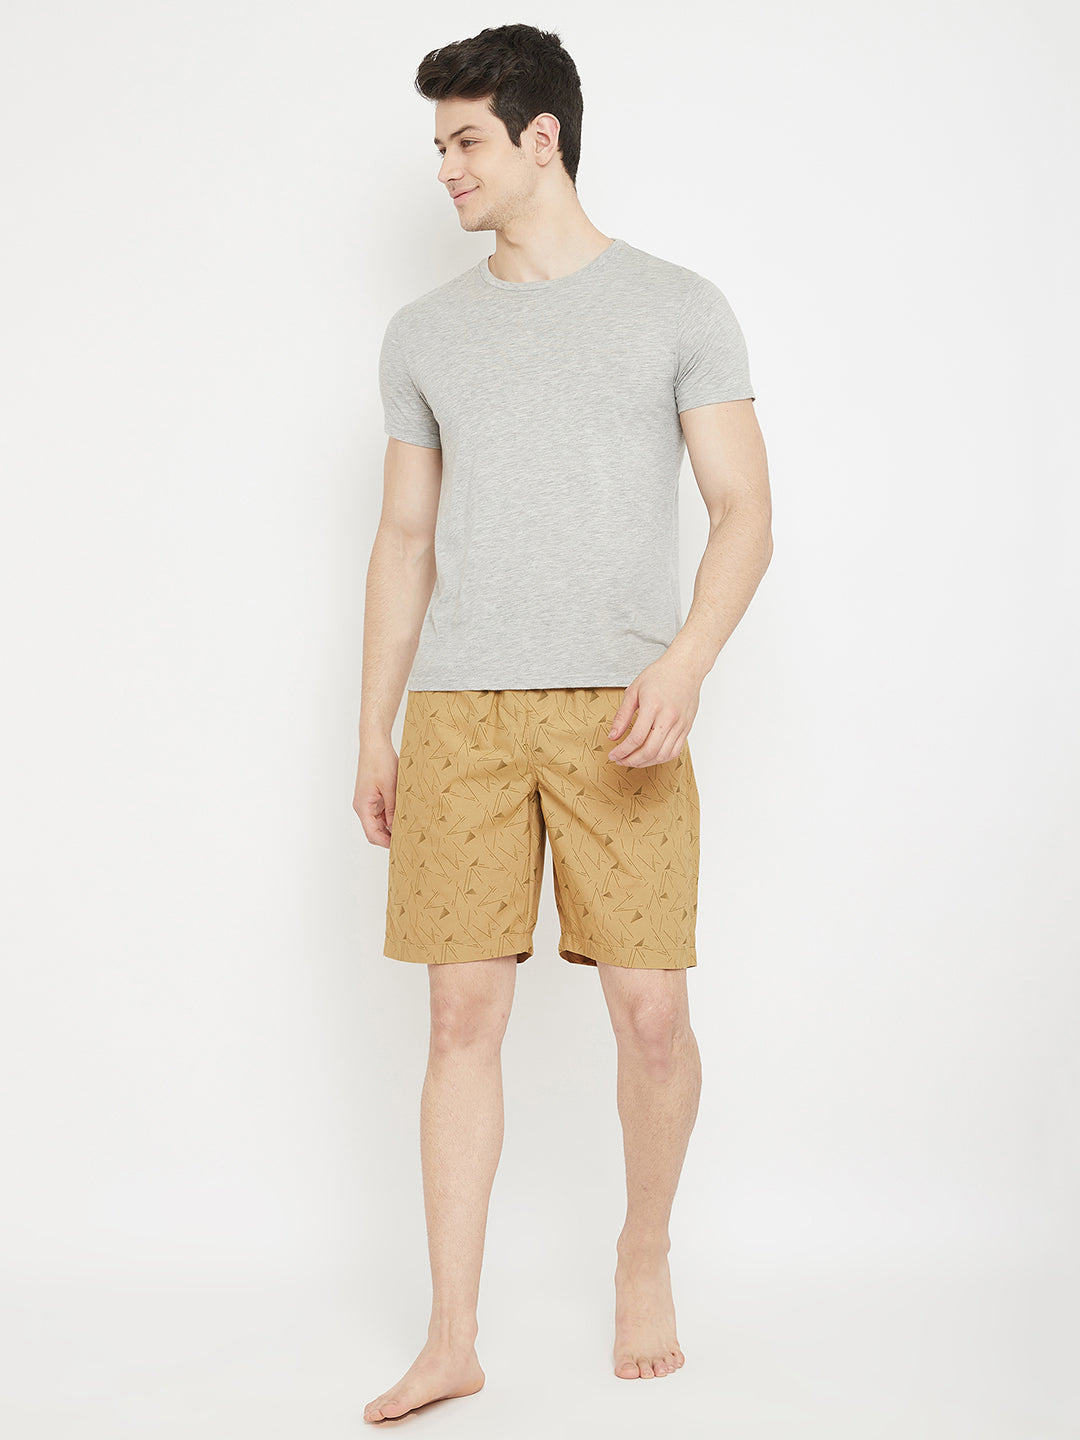 Beige Printed Lounge Shorts - Men Lounge Shorts